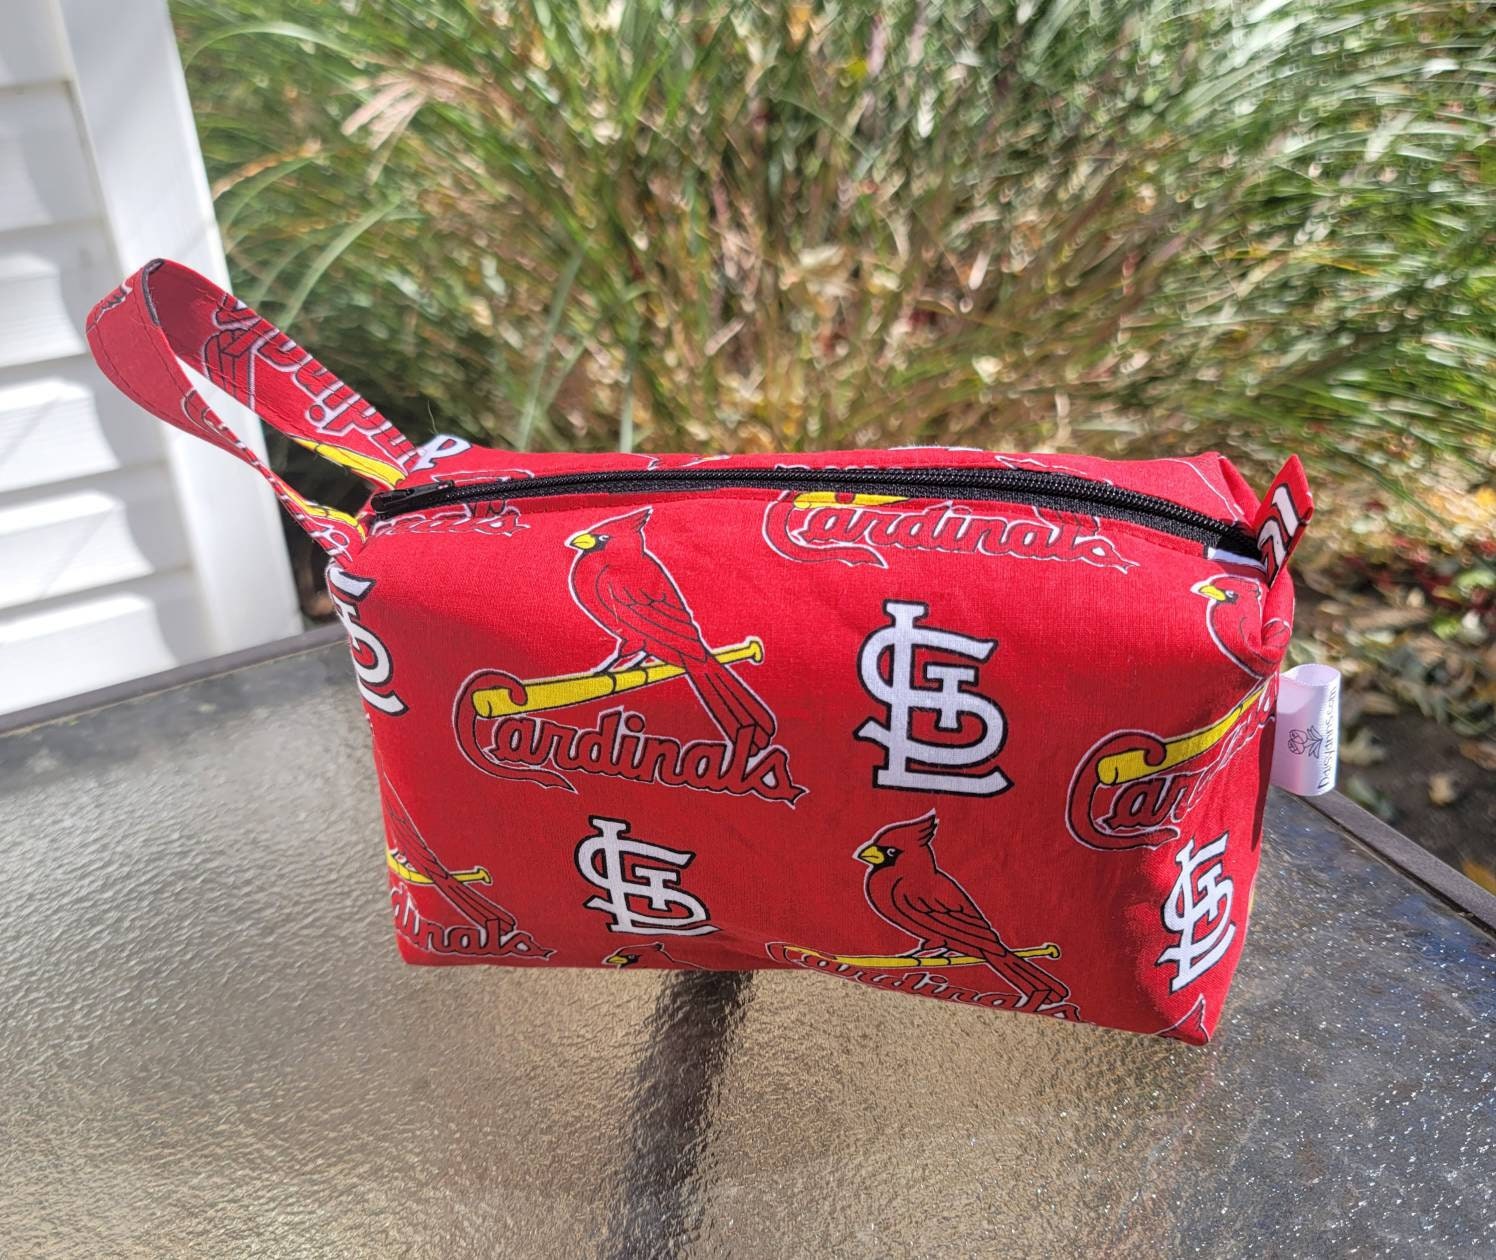 St Louis Cardinals, Bags